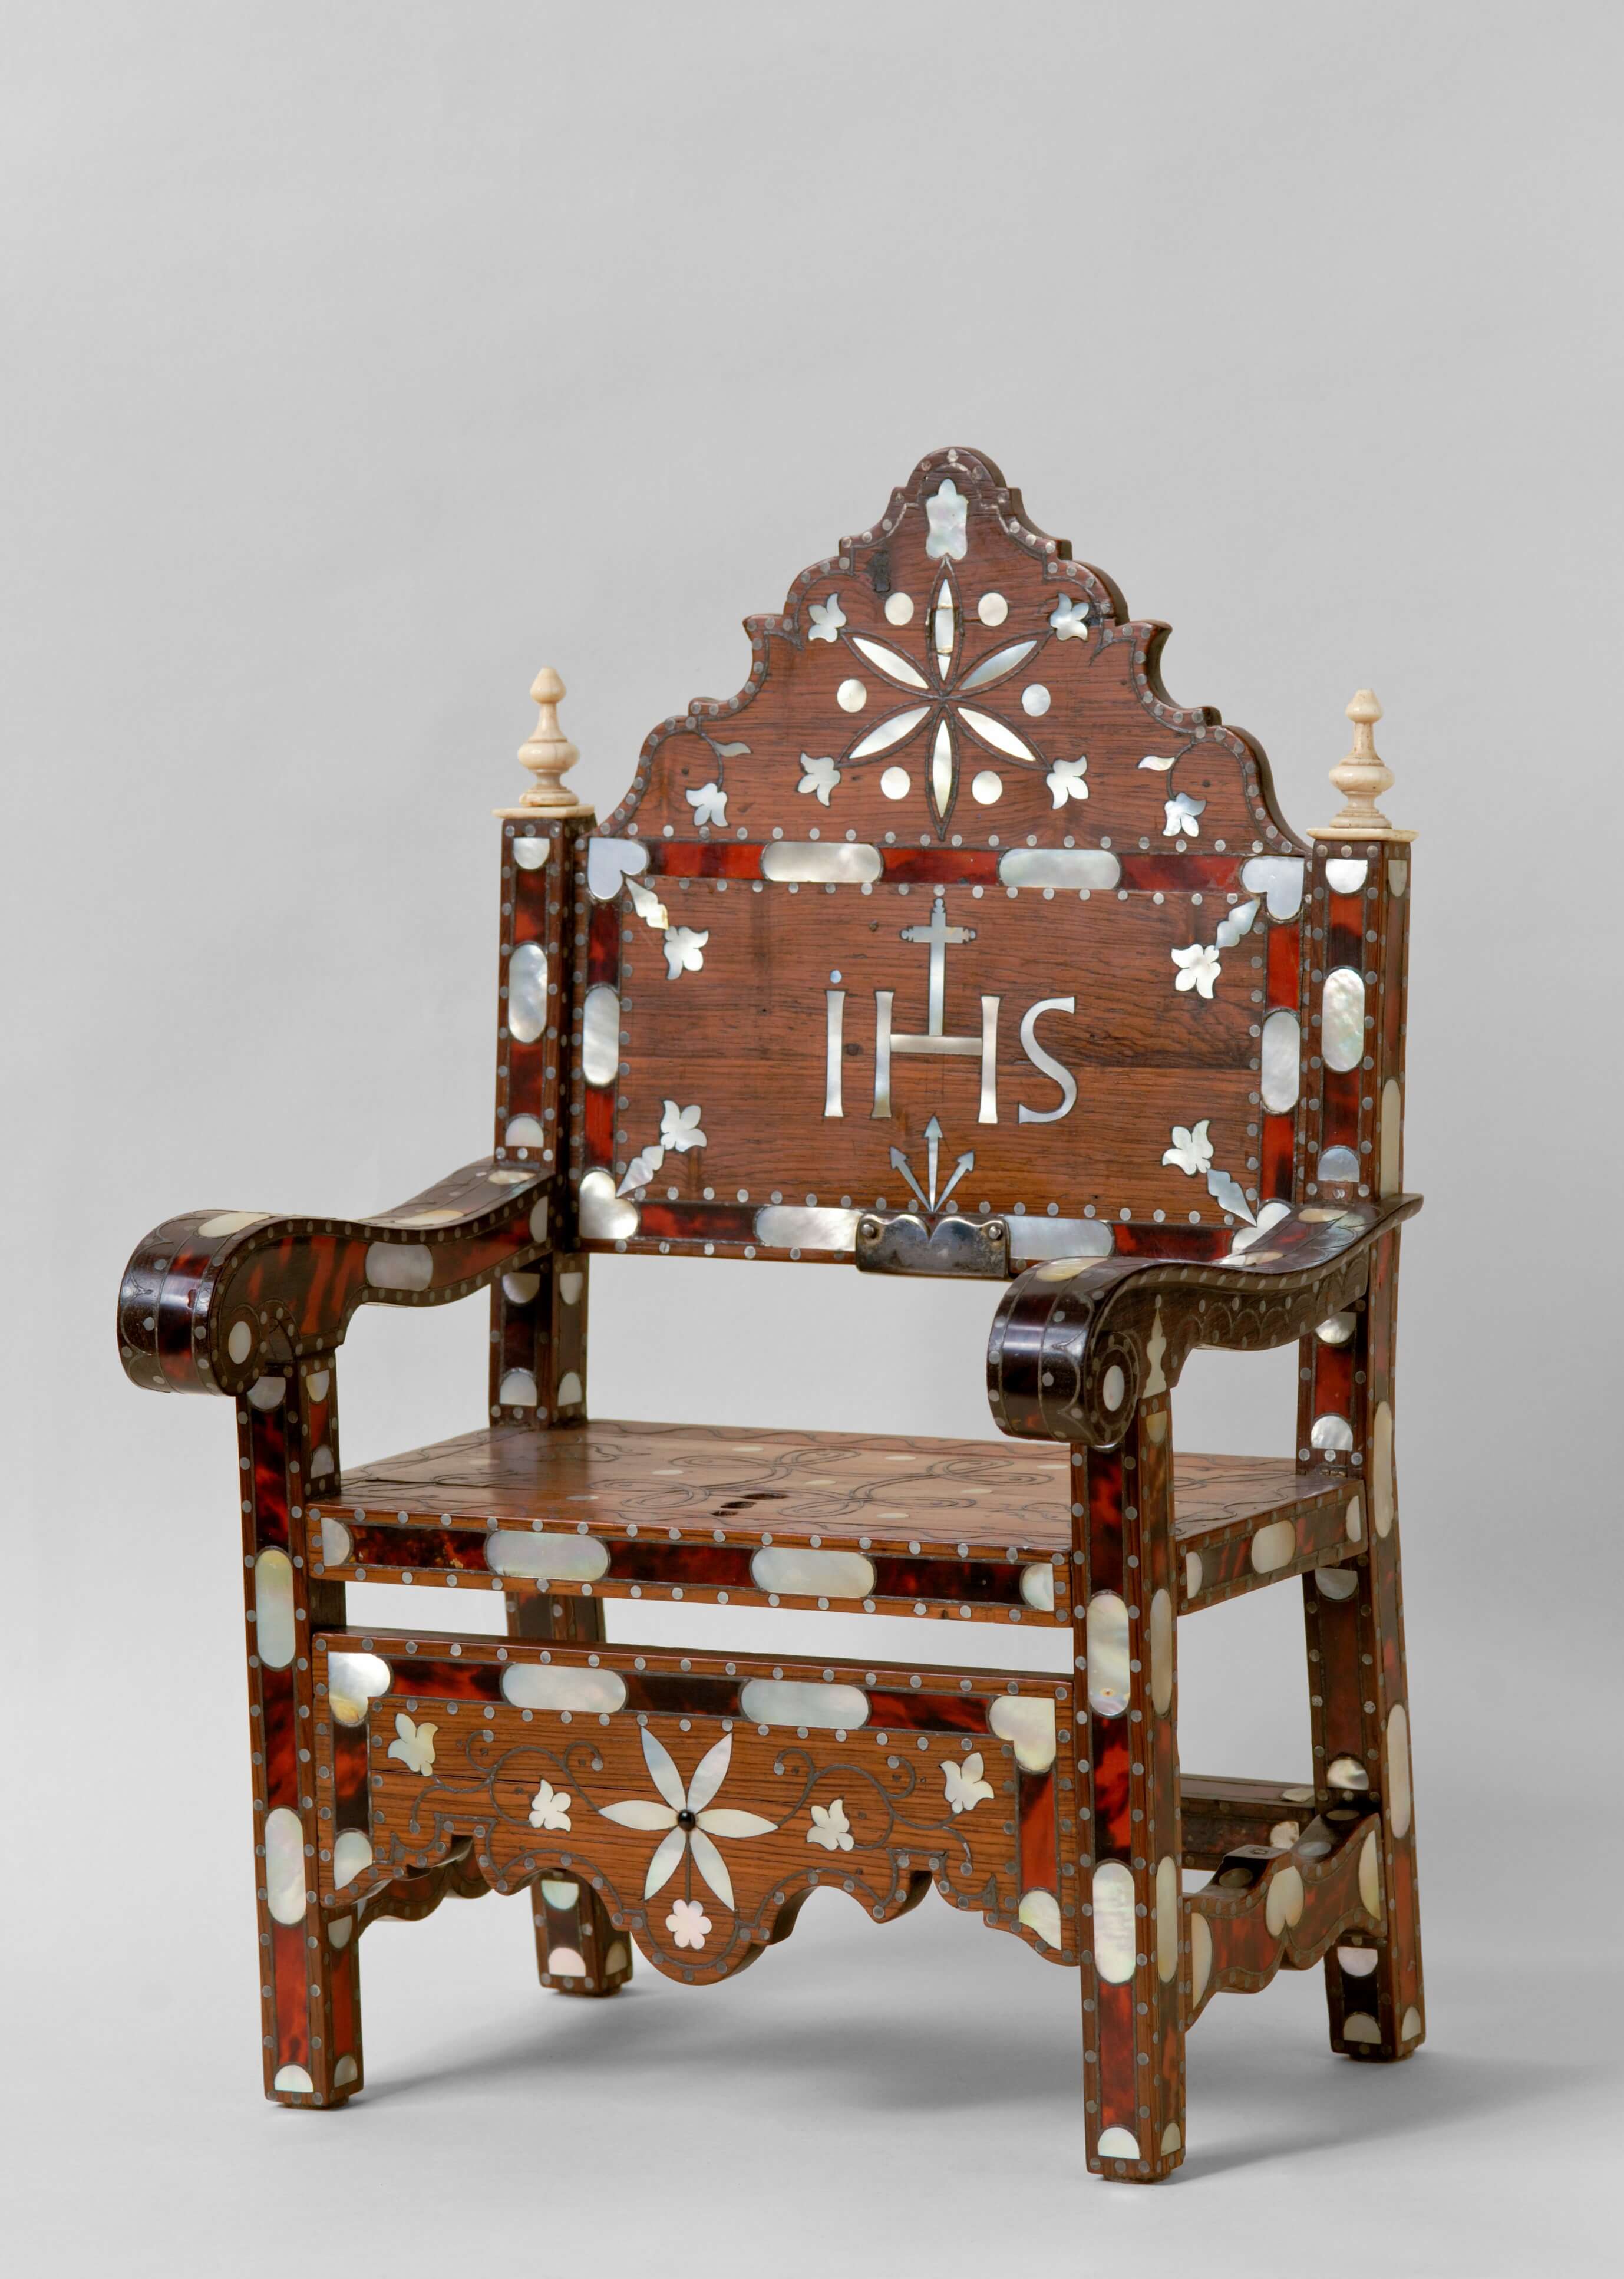 Infant Jesus chair